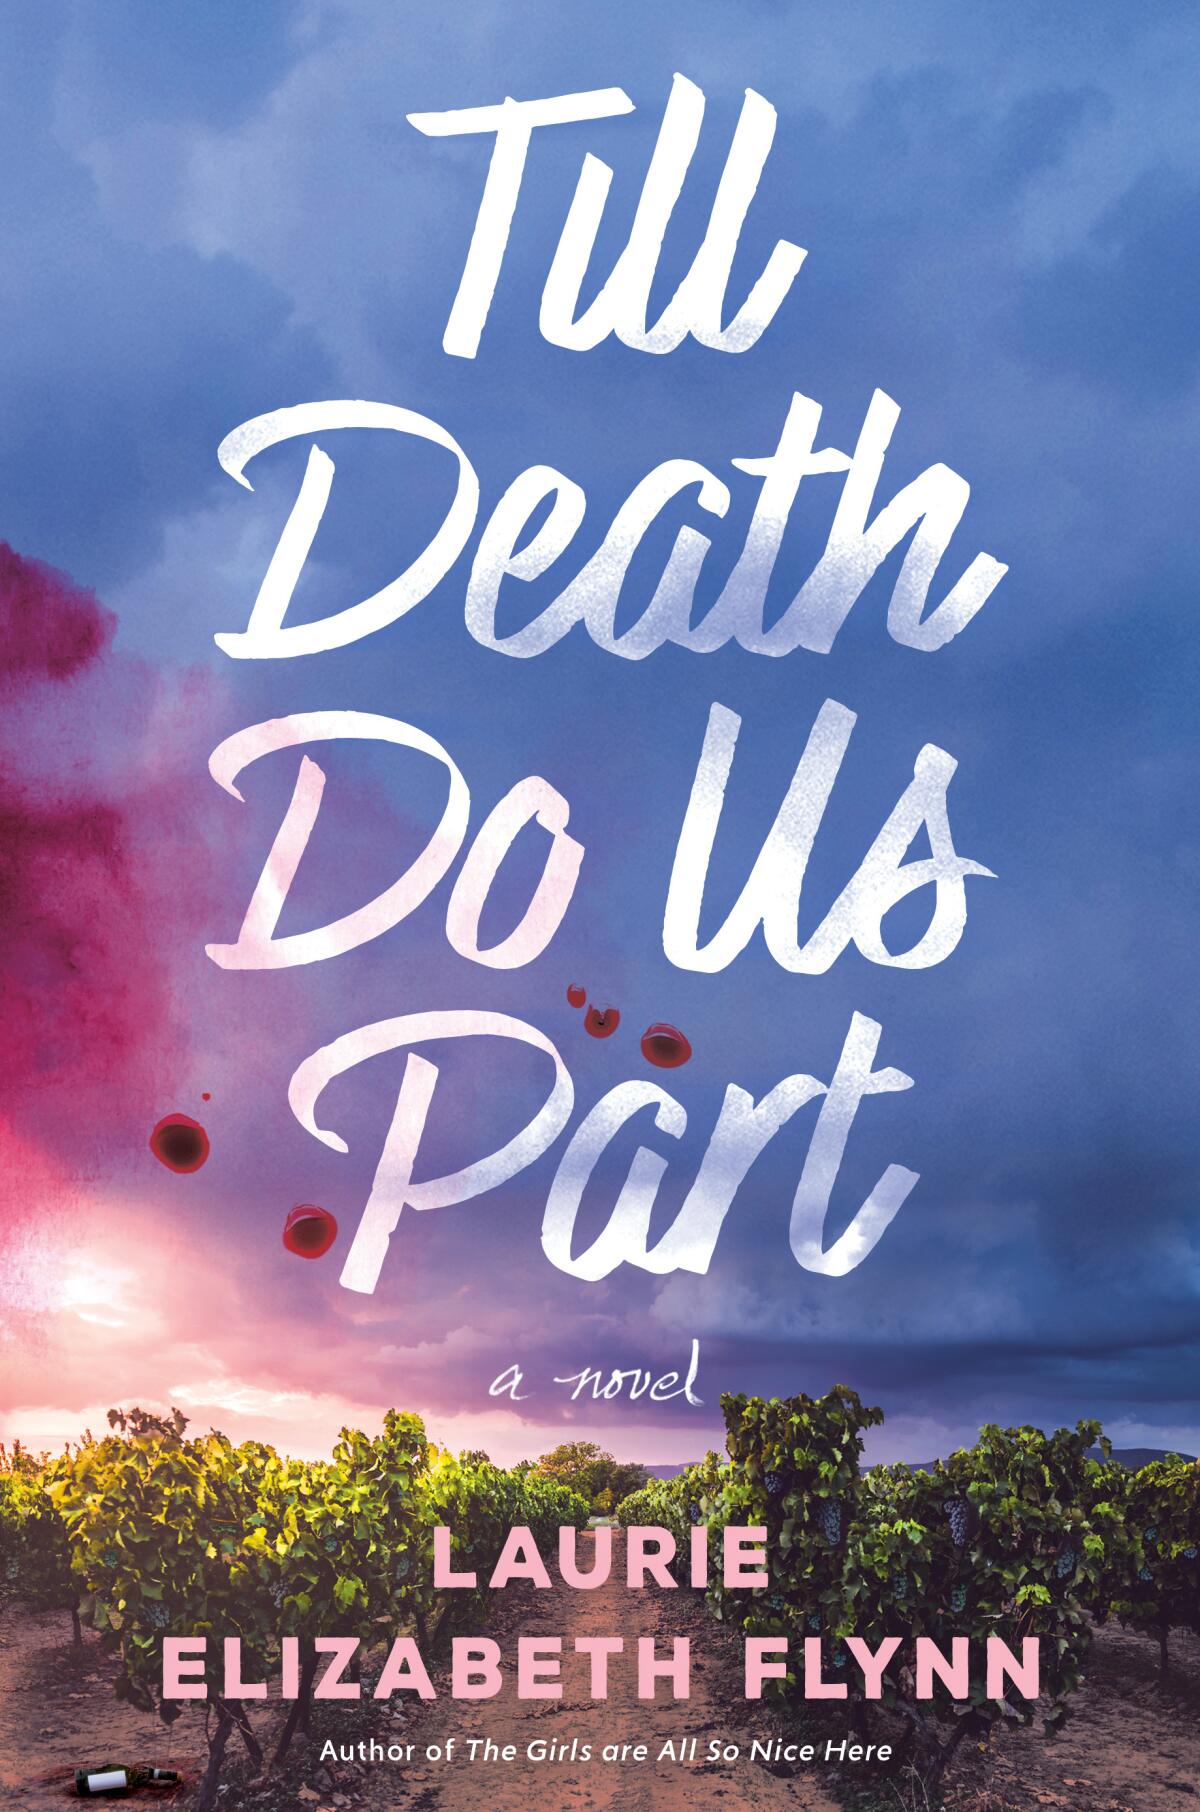 "Till Death Do Us Part" by Laurie Elizabeth Flynn